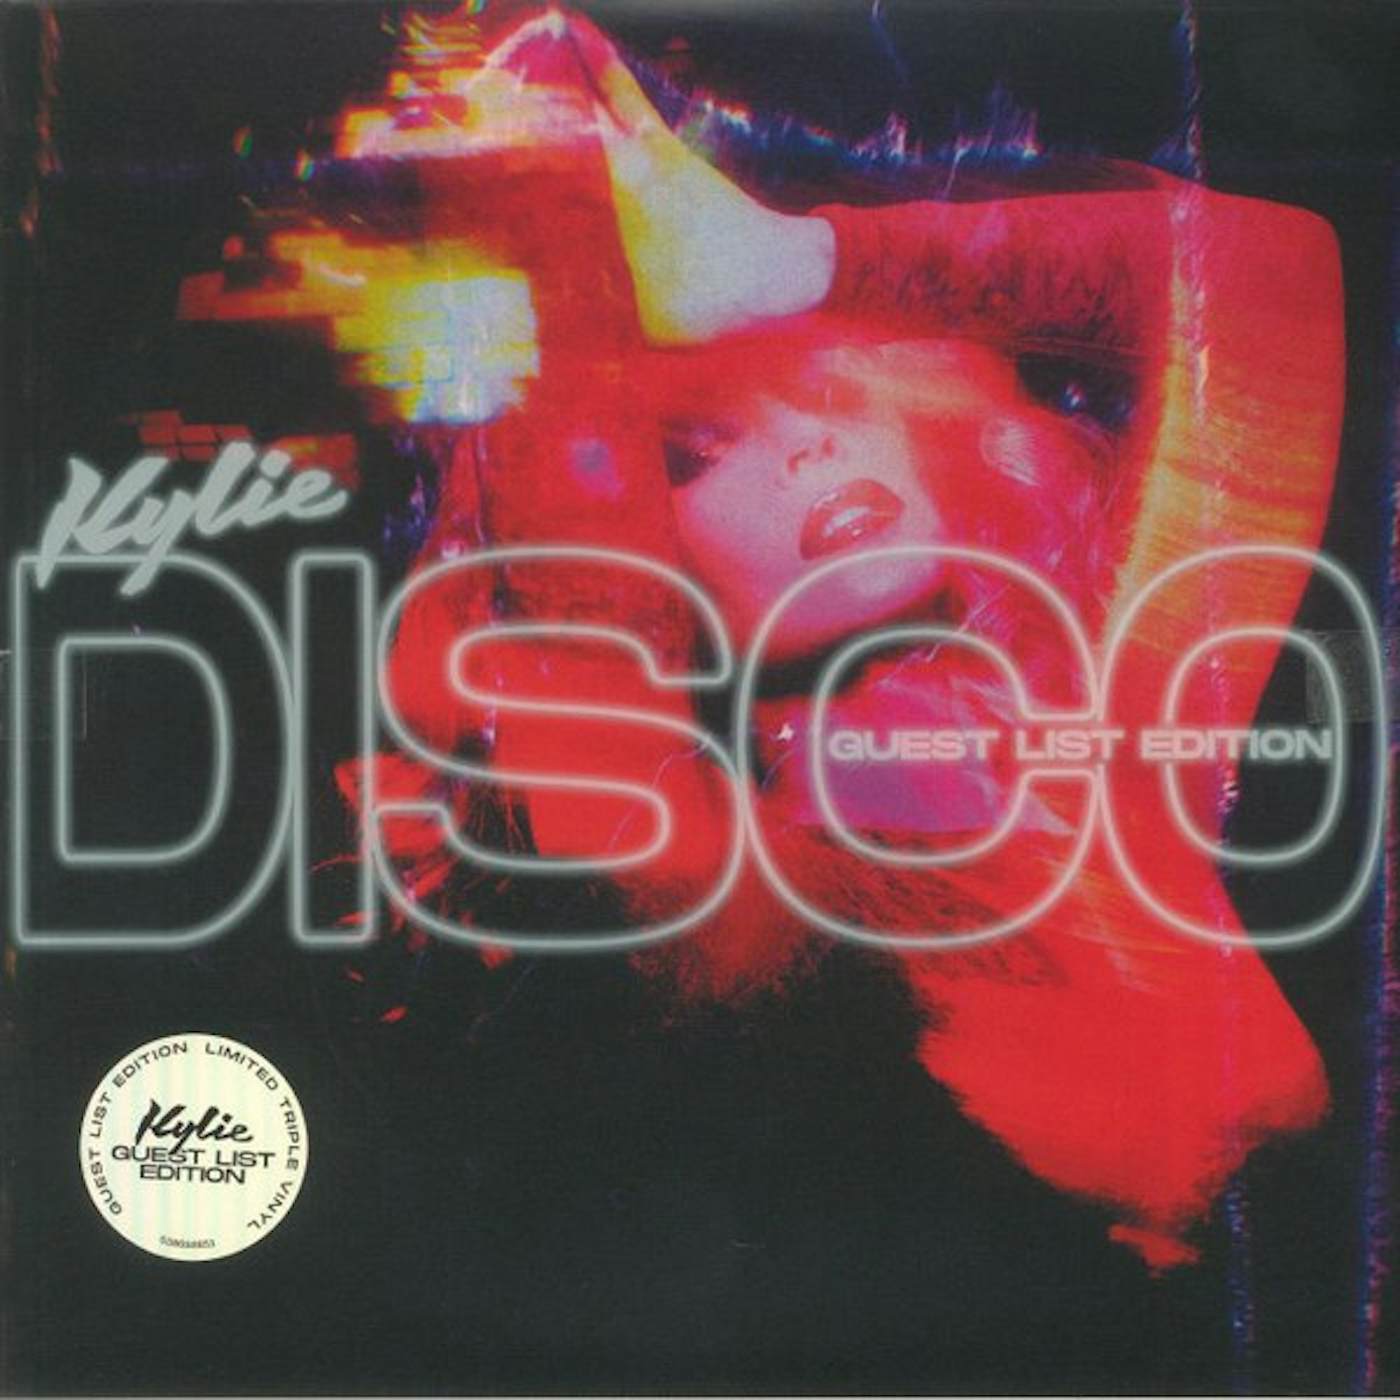 Kylie Minogue DISCO: Guest List Edition Vinyl Record